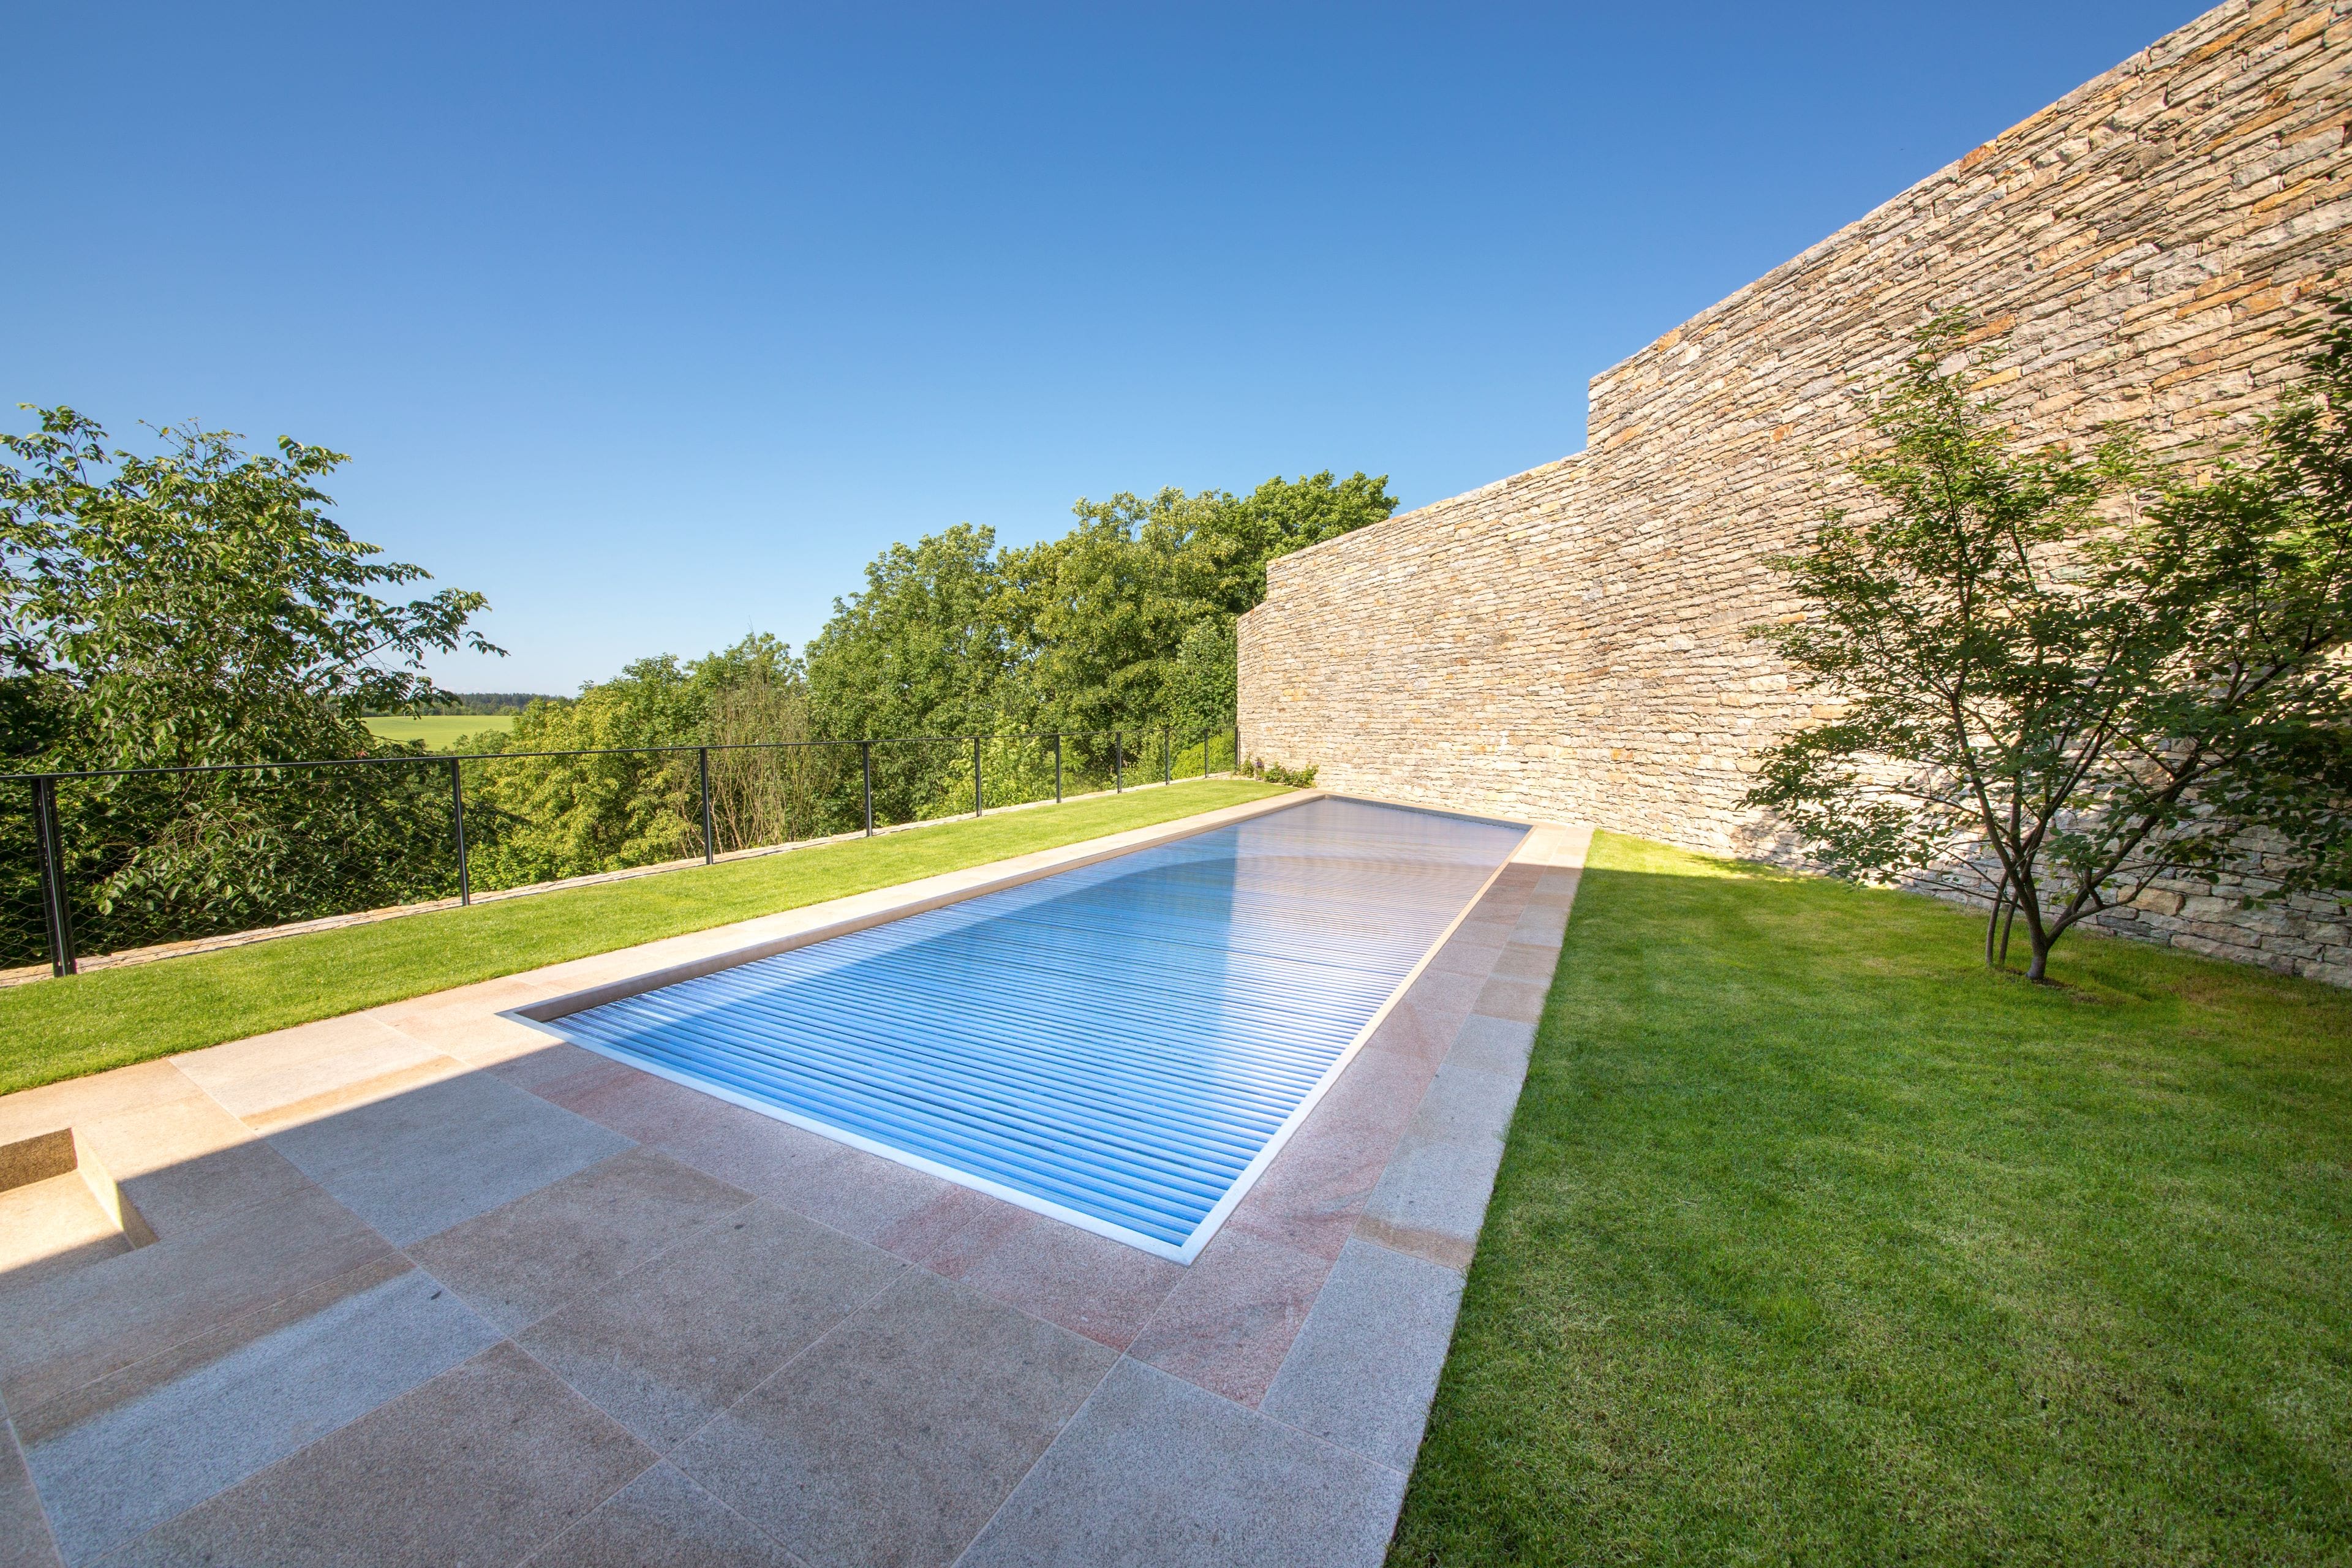 Stainless-Steel Pool in Geometric Modern Design